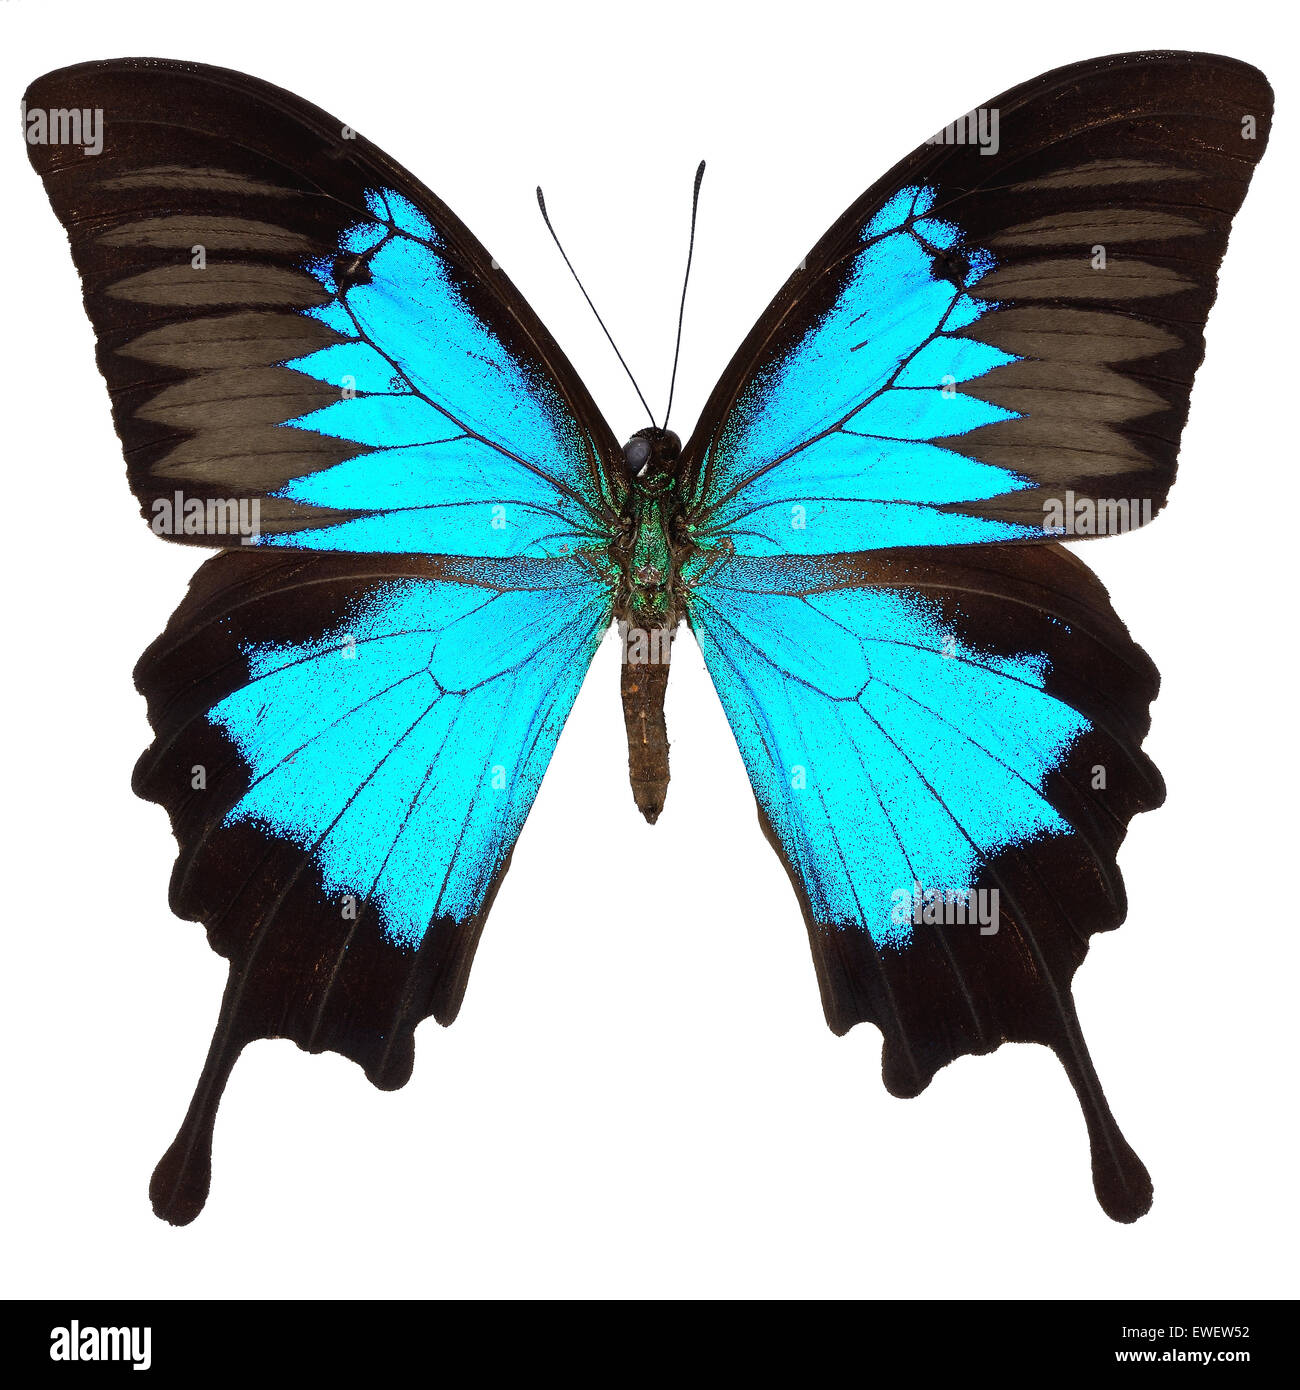 Stunning Blue Butterflies From Around The World - Australian